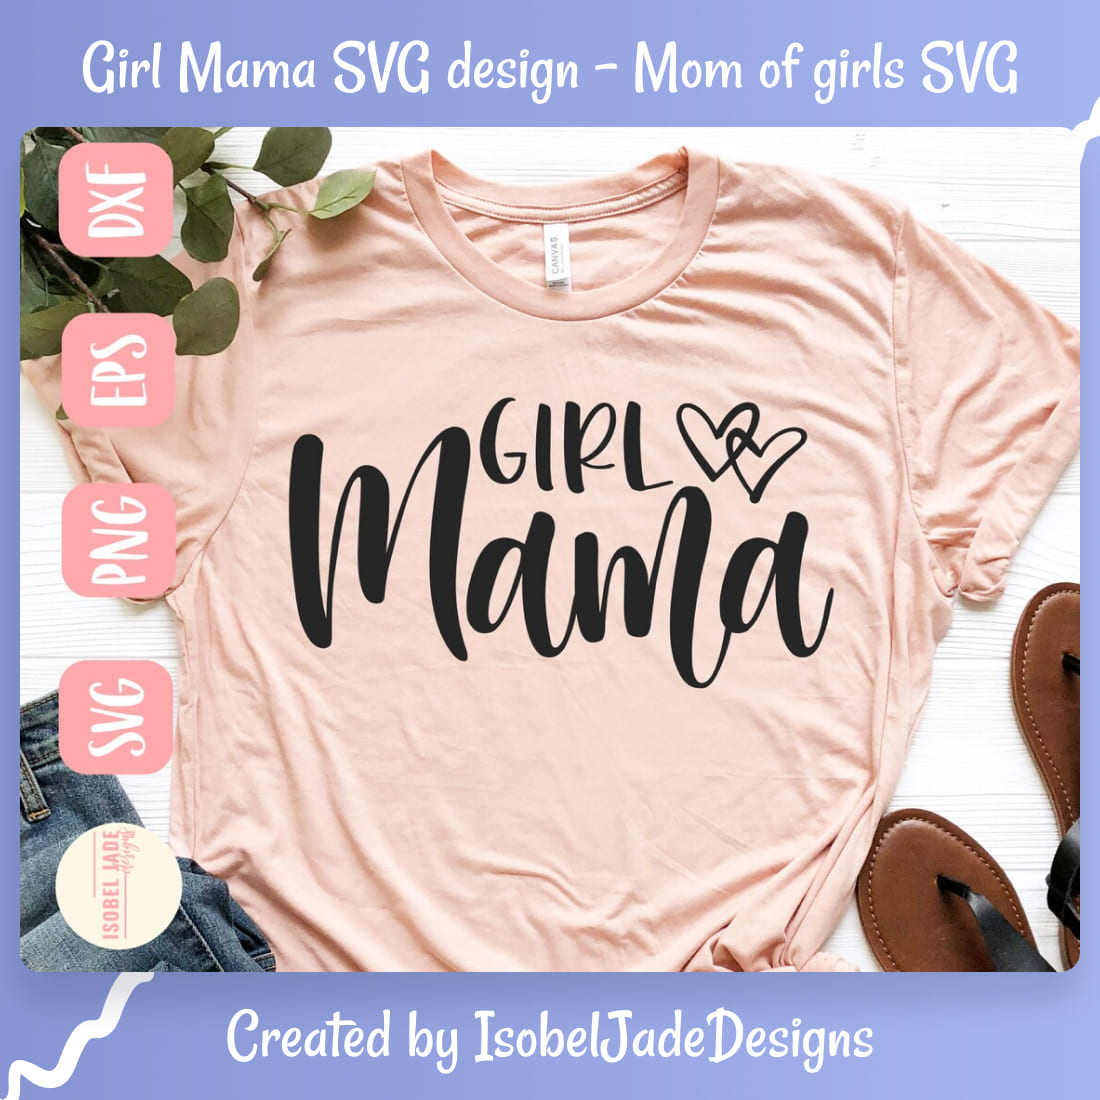 Girl Mama SVG design main cover.